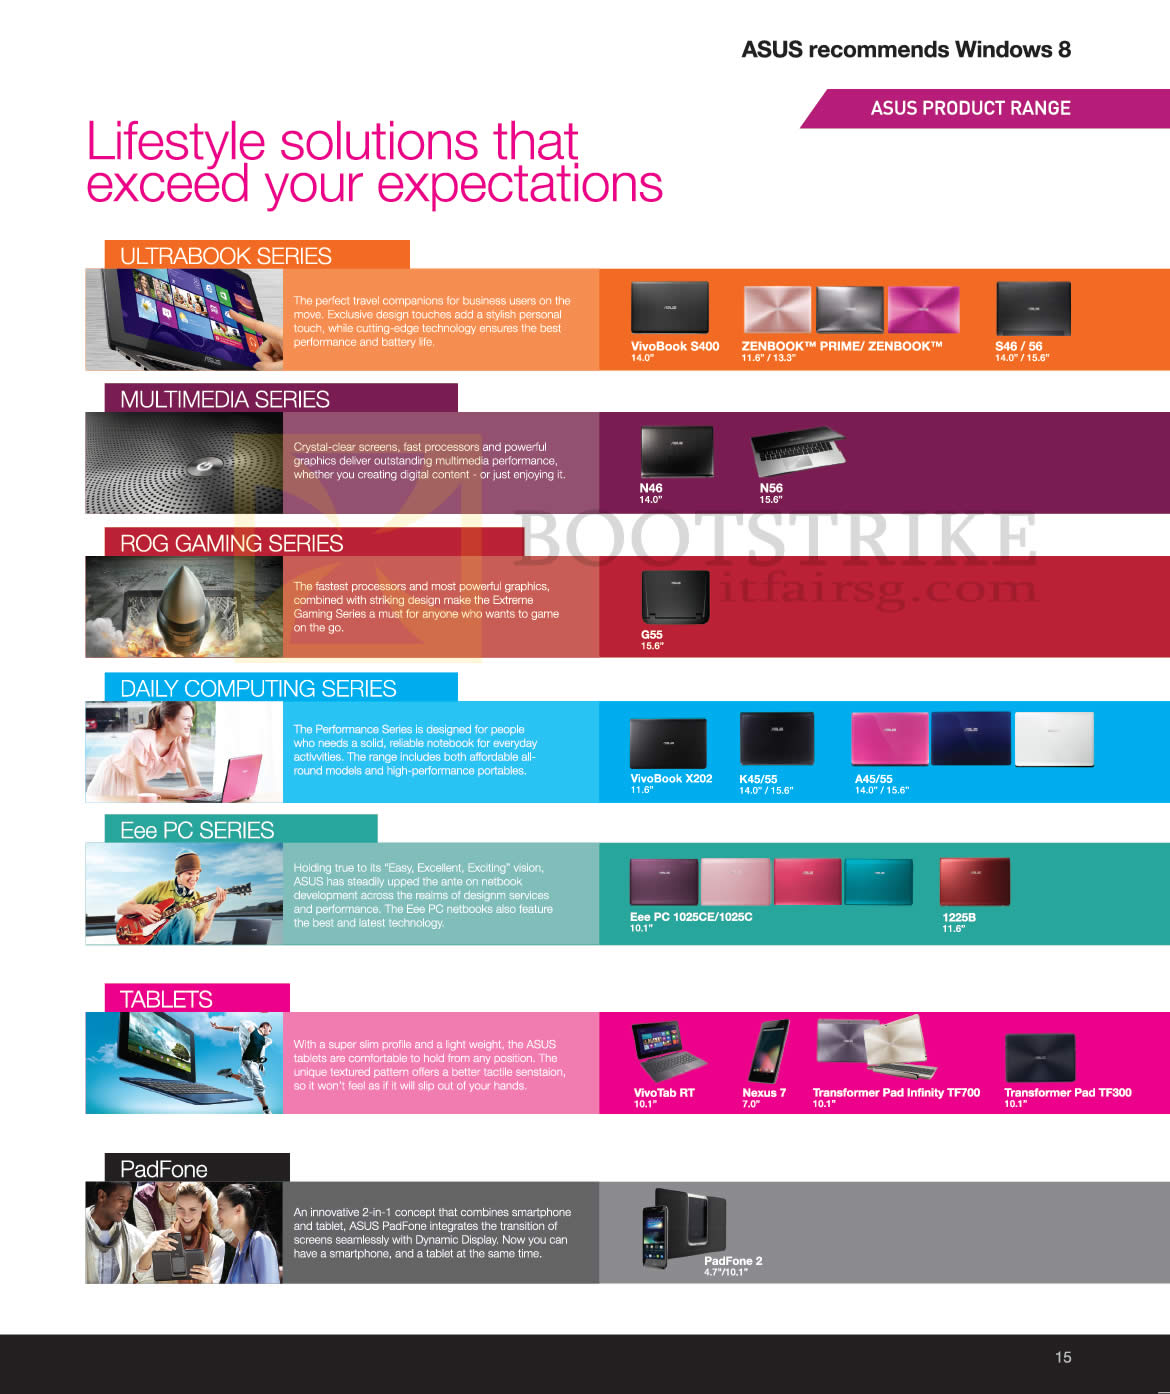 SITEX 2012 price list image brochure of ASUS Product Range